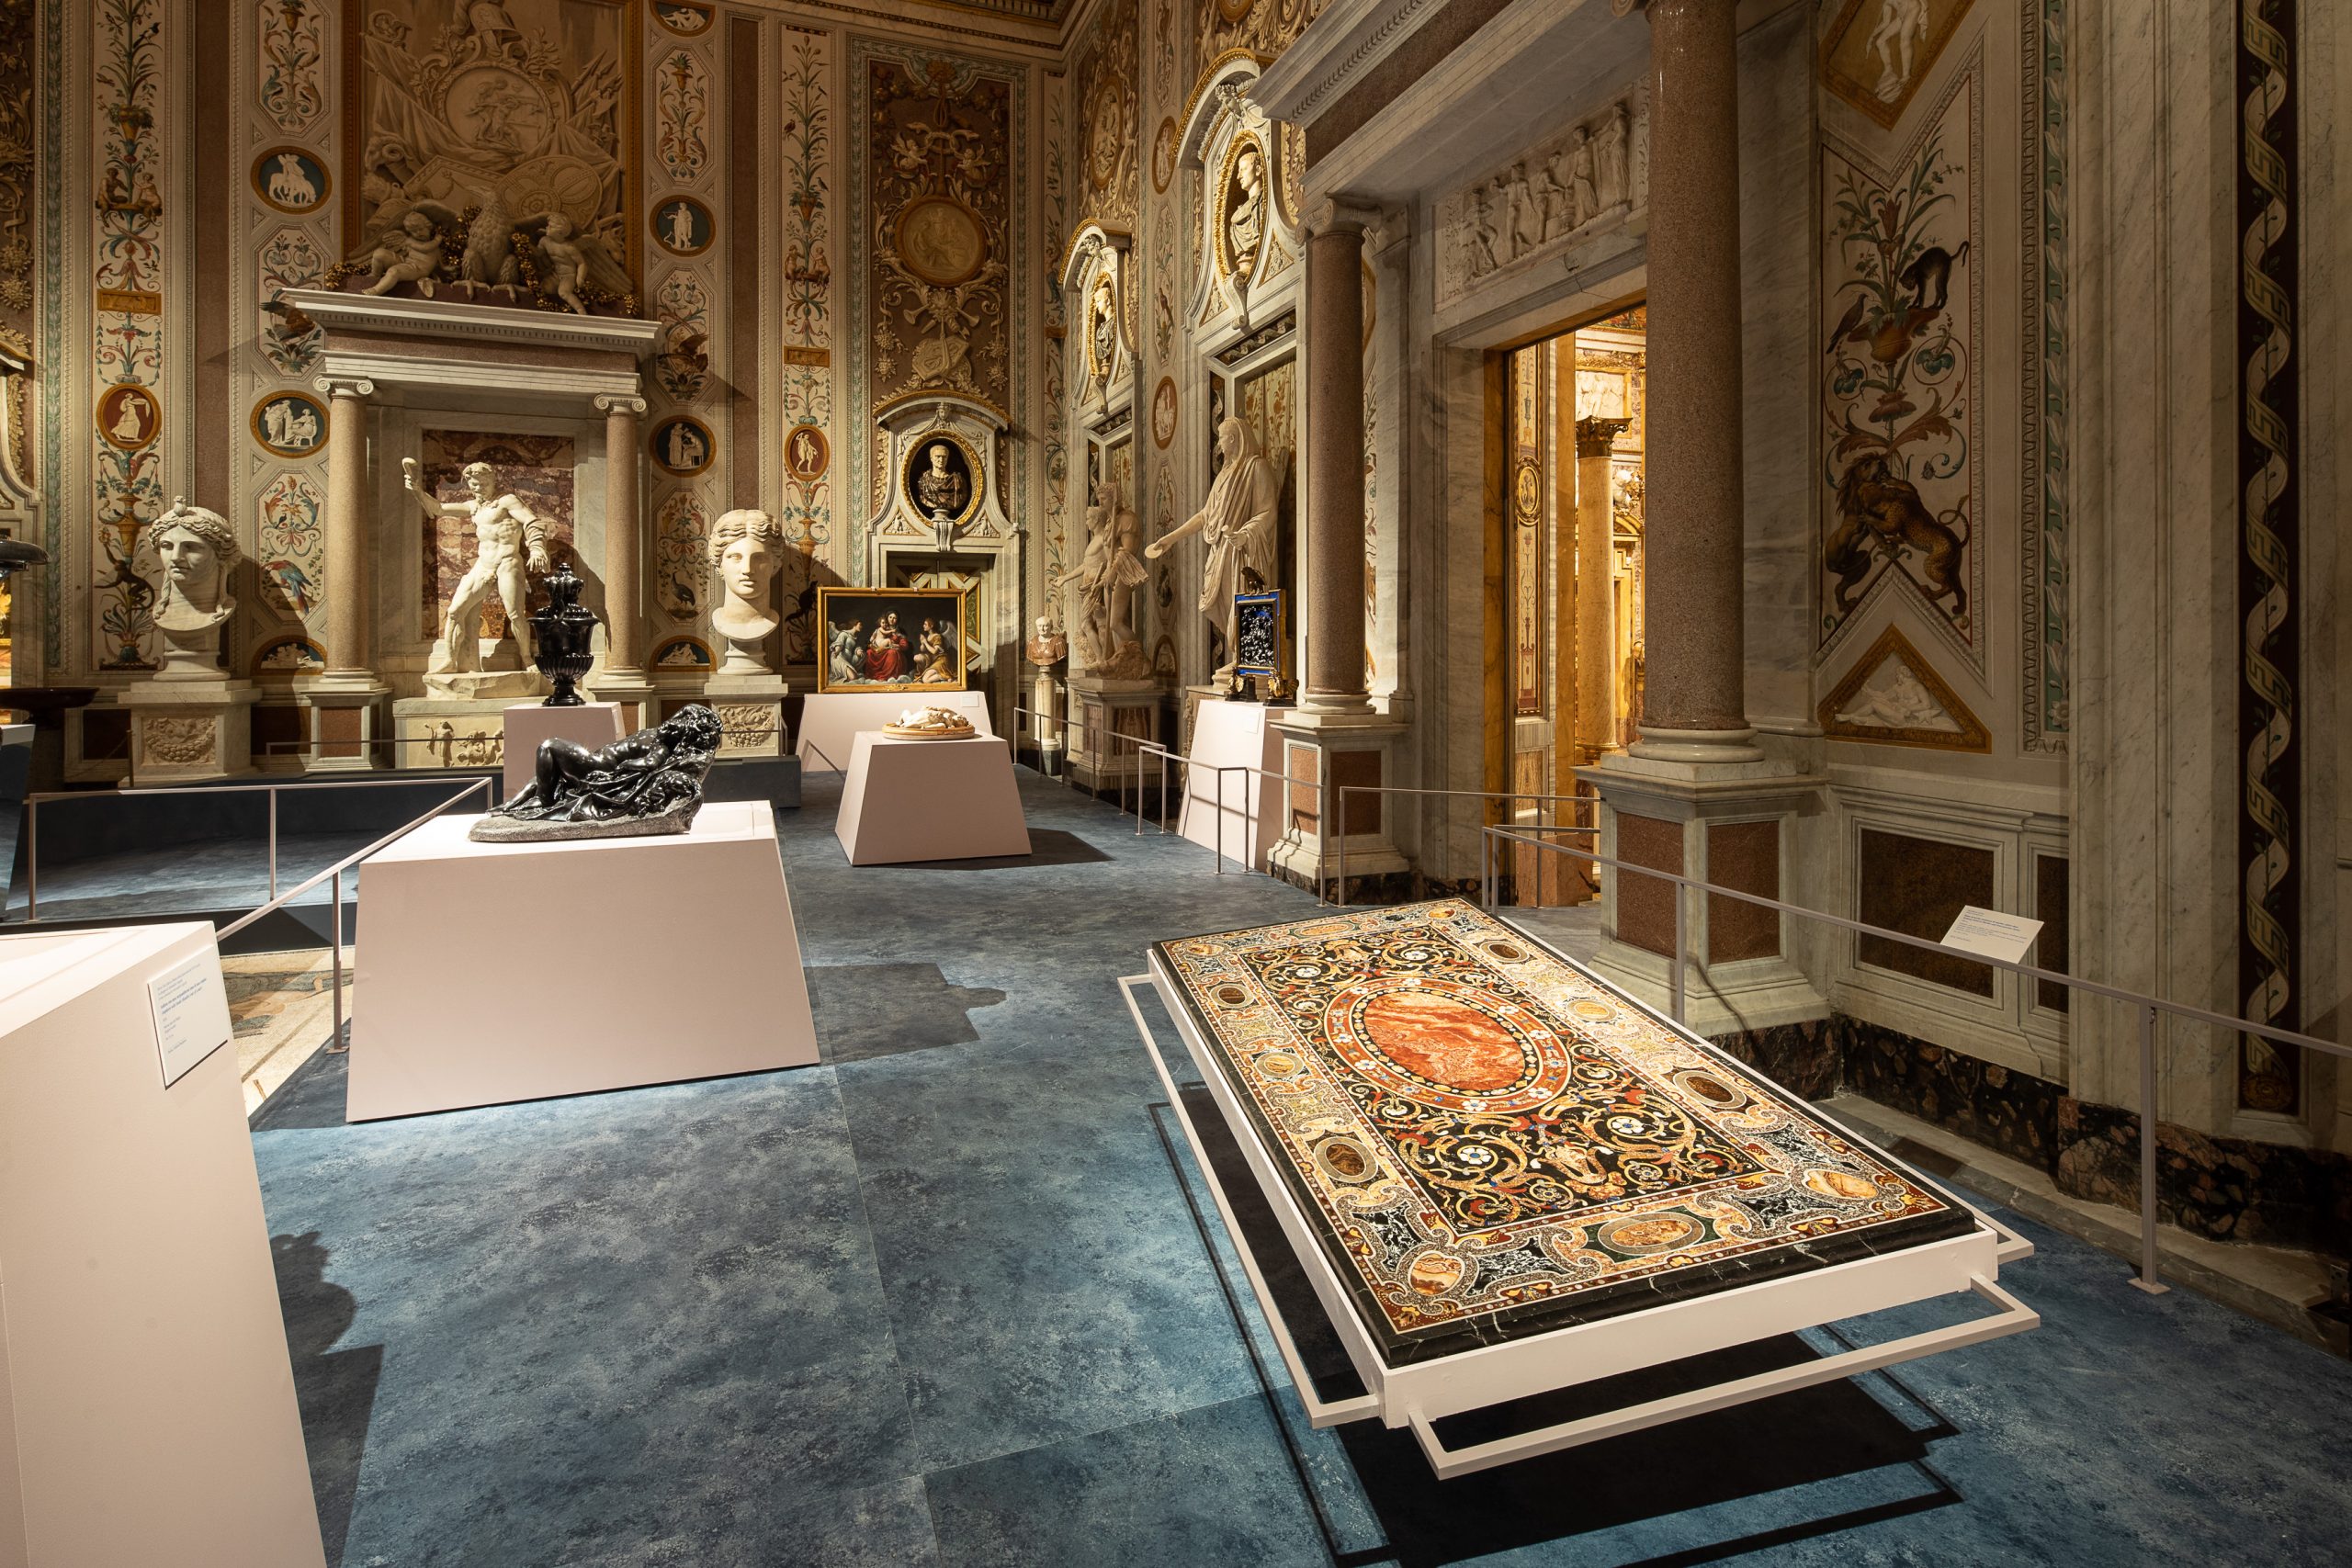 3. Installation view Ph. A. Novelli © Galleria Borghese